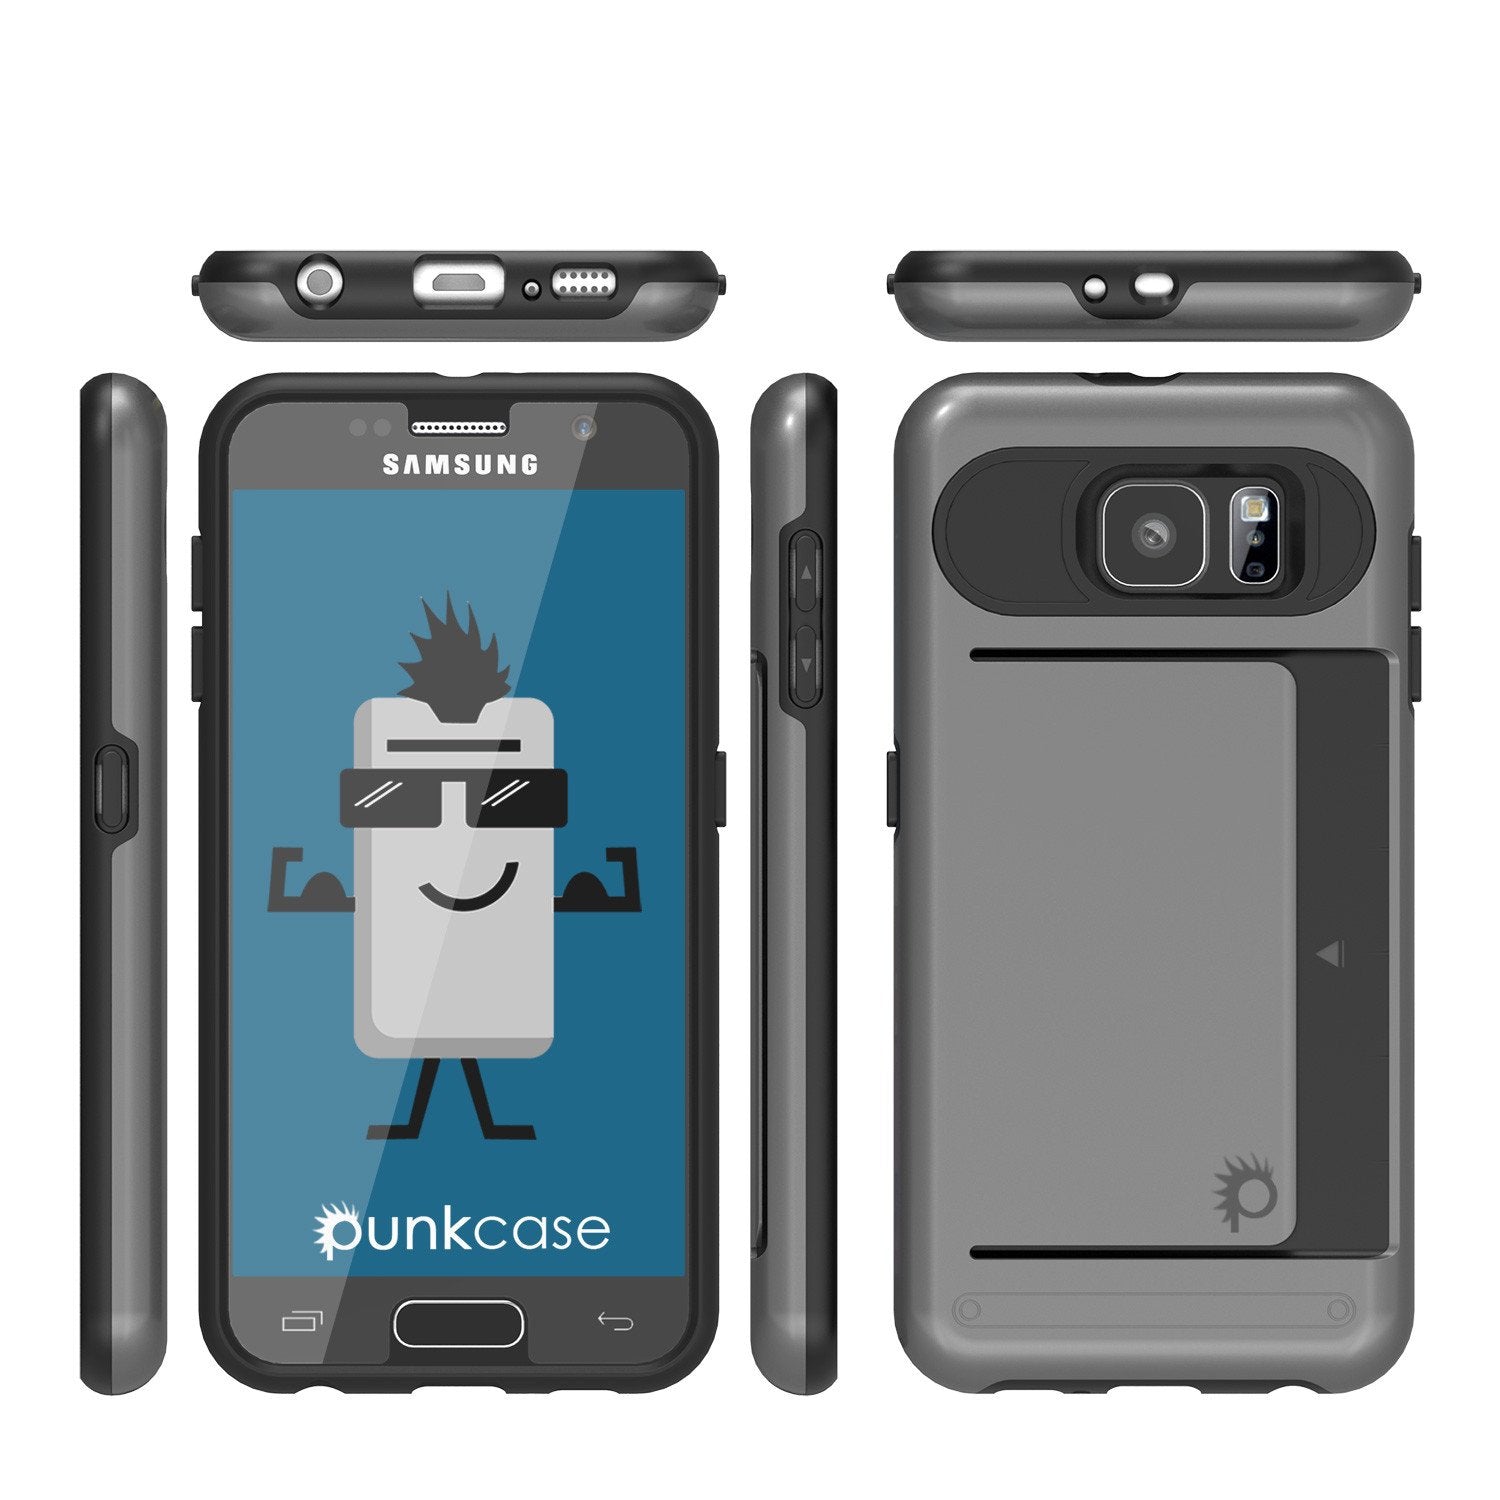 Galaxy s6 Case PunkCase CLUTCH Grey Series Slim Armor Soft Cover Case w/ Tempered Glass - PunkCase NZ